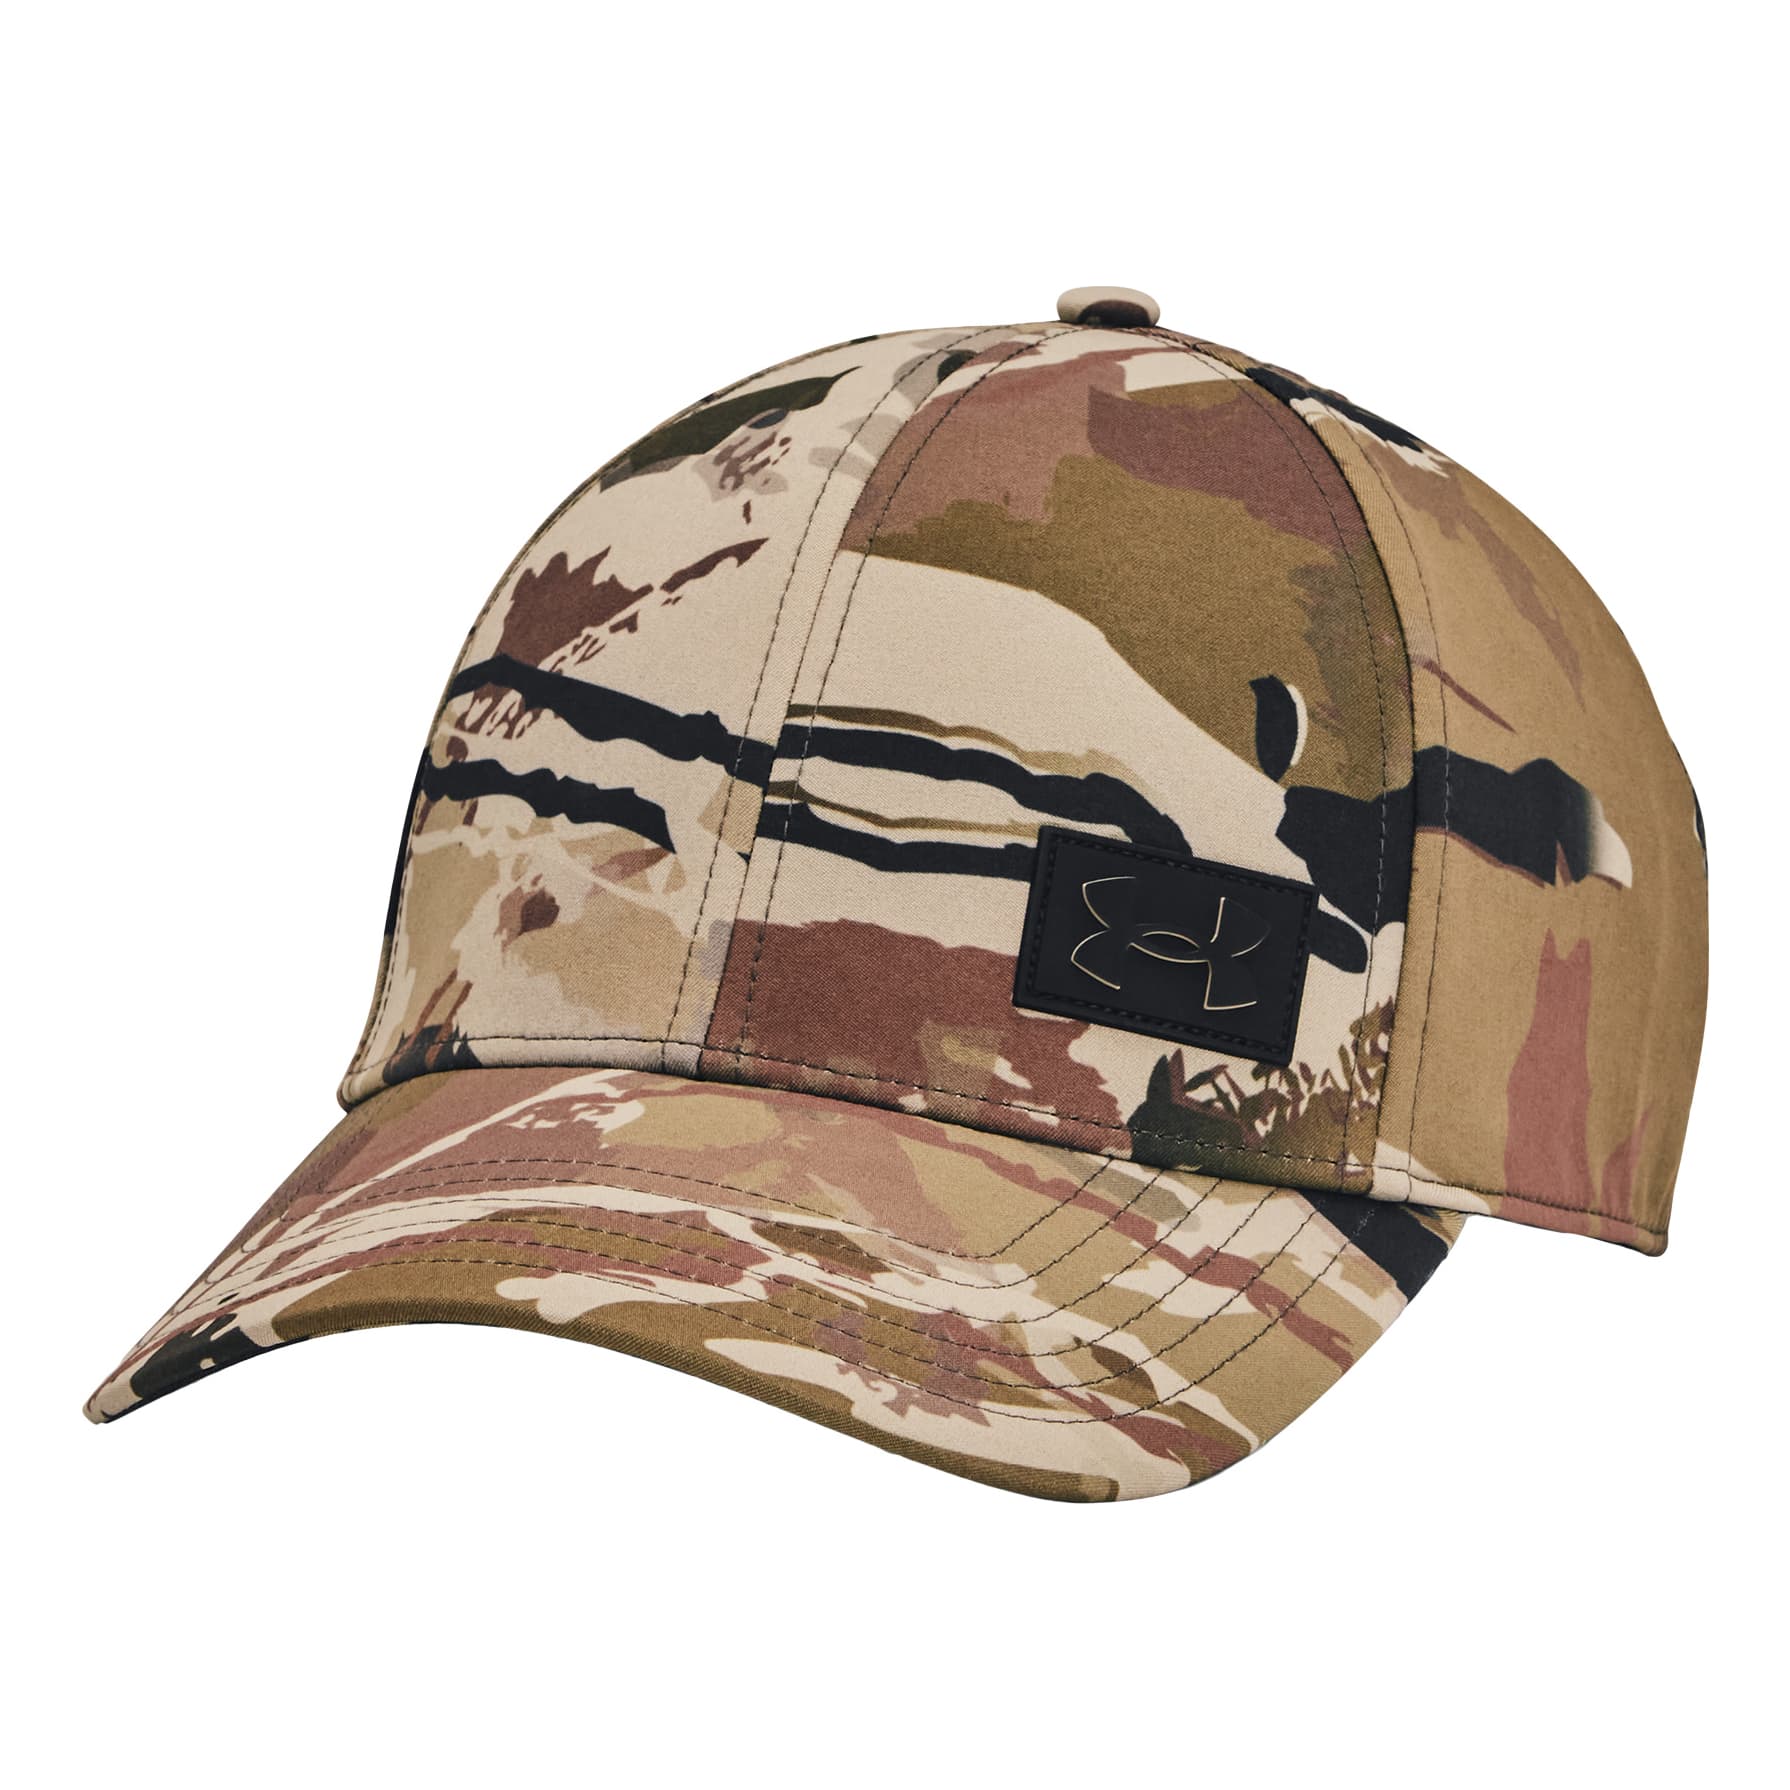 Under Armour Hat Cap Men Medium Fitted Black Blitzing Logo Tactical  Baseball